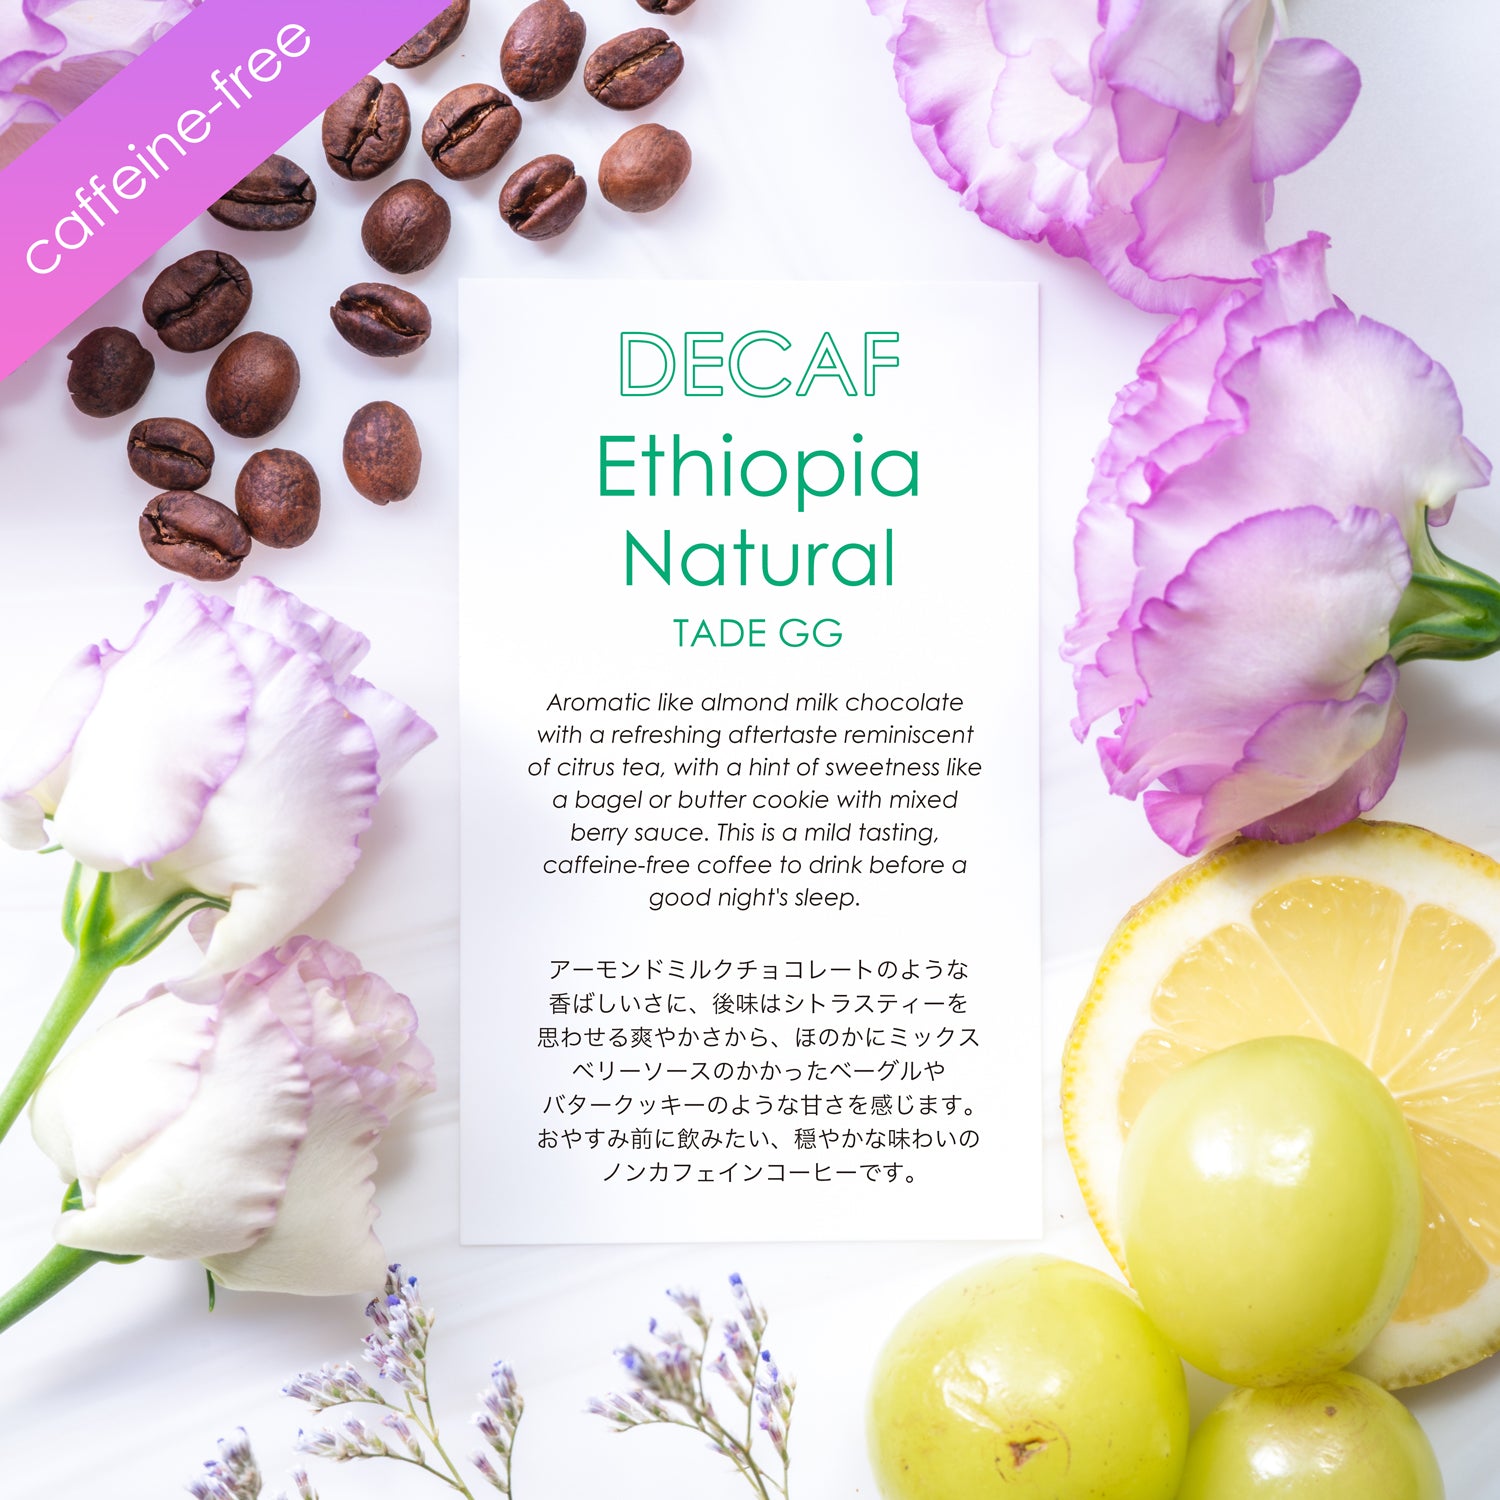 Decaf Ethiopia TADE GG Natural[caffeine-free]